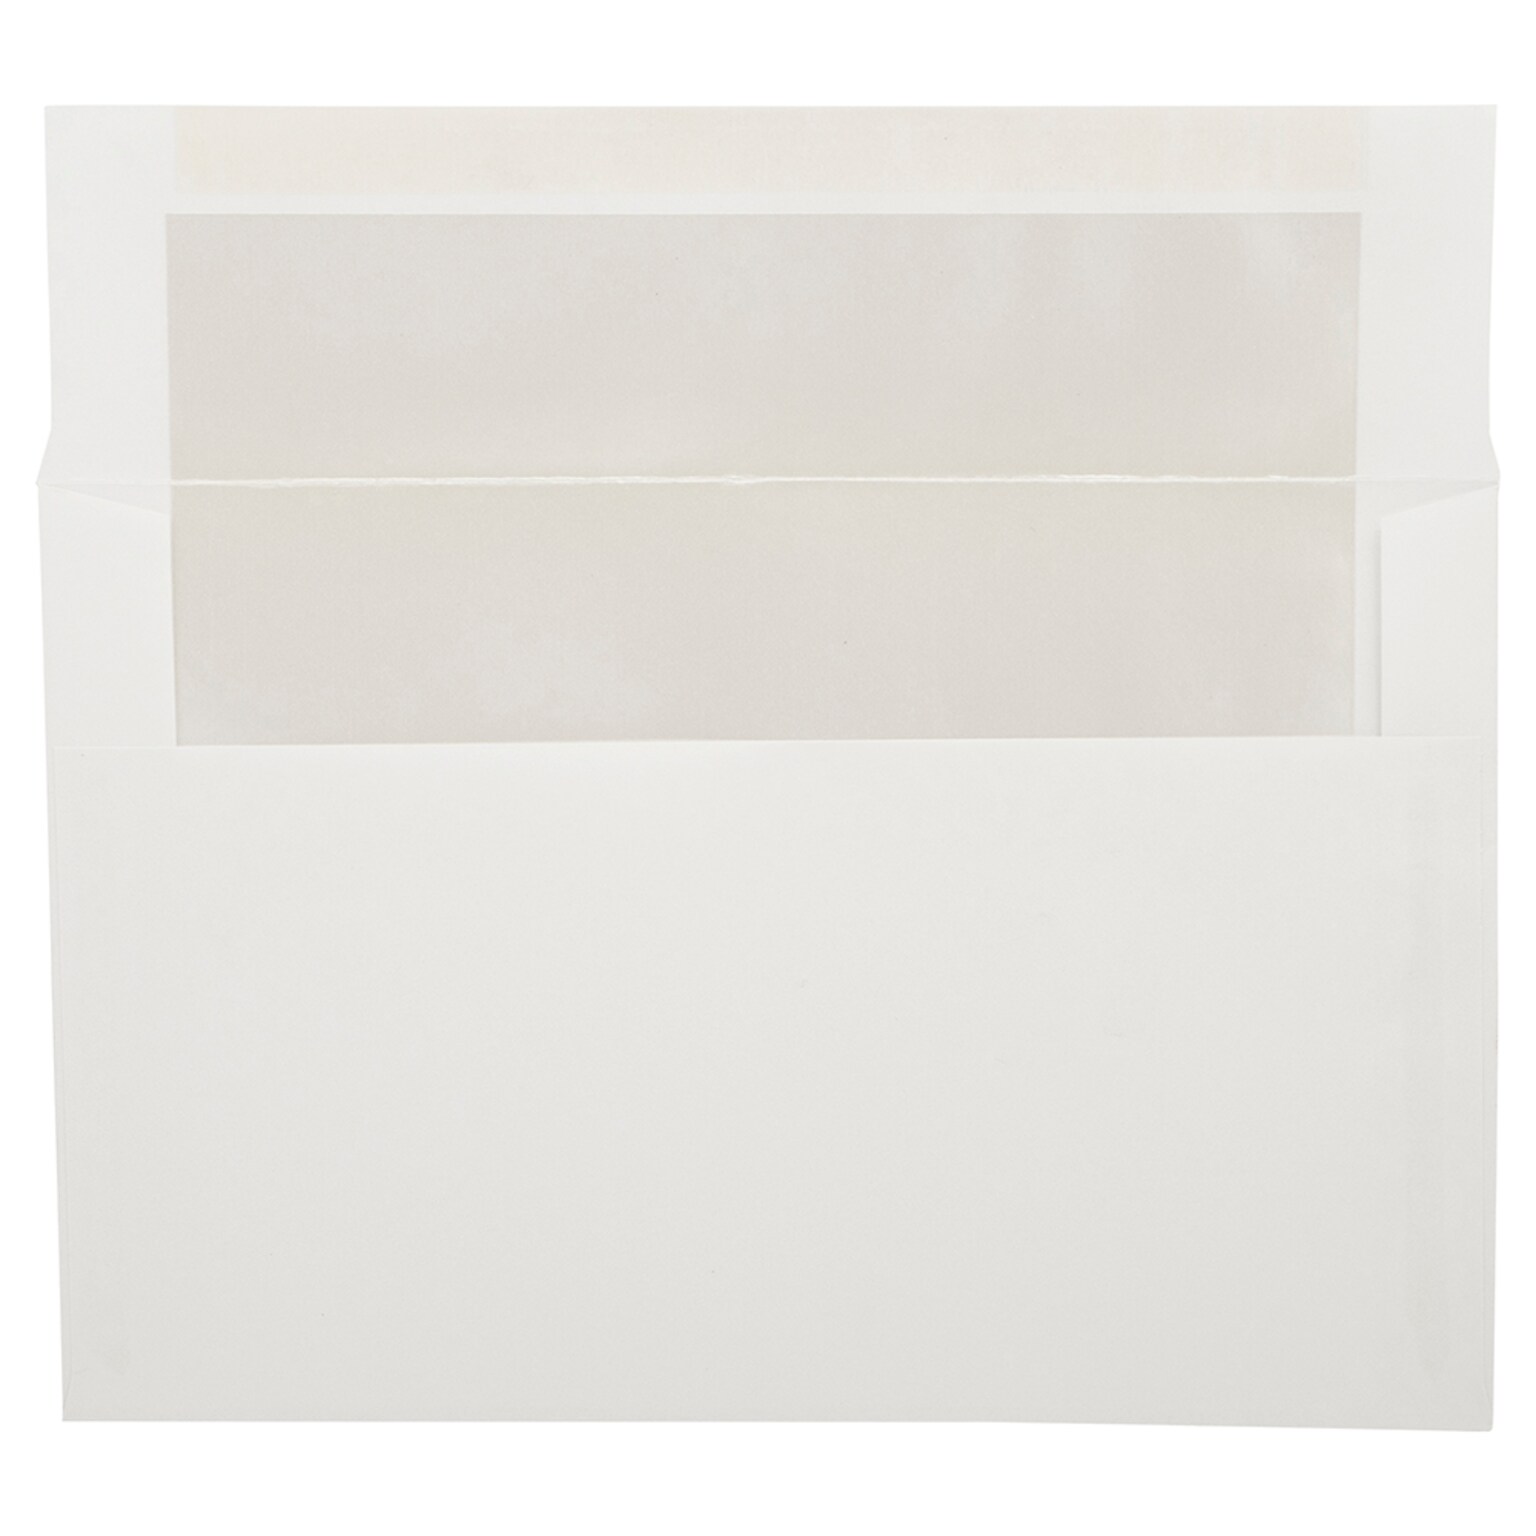 JAM Paper A9 Foil Lined Invitation Envelopes, 5.75 x 8.75, White with Ivory Foil, 50/Pack (532412546I)